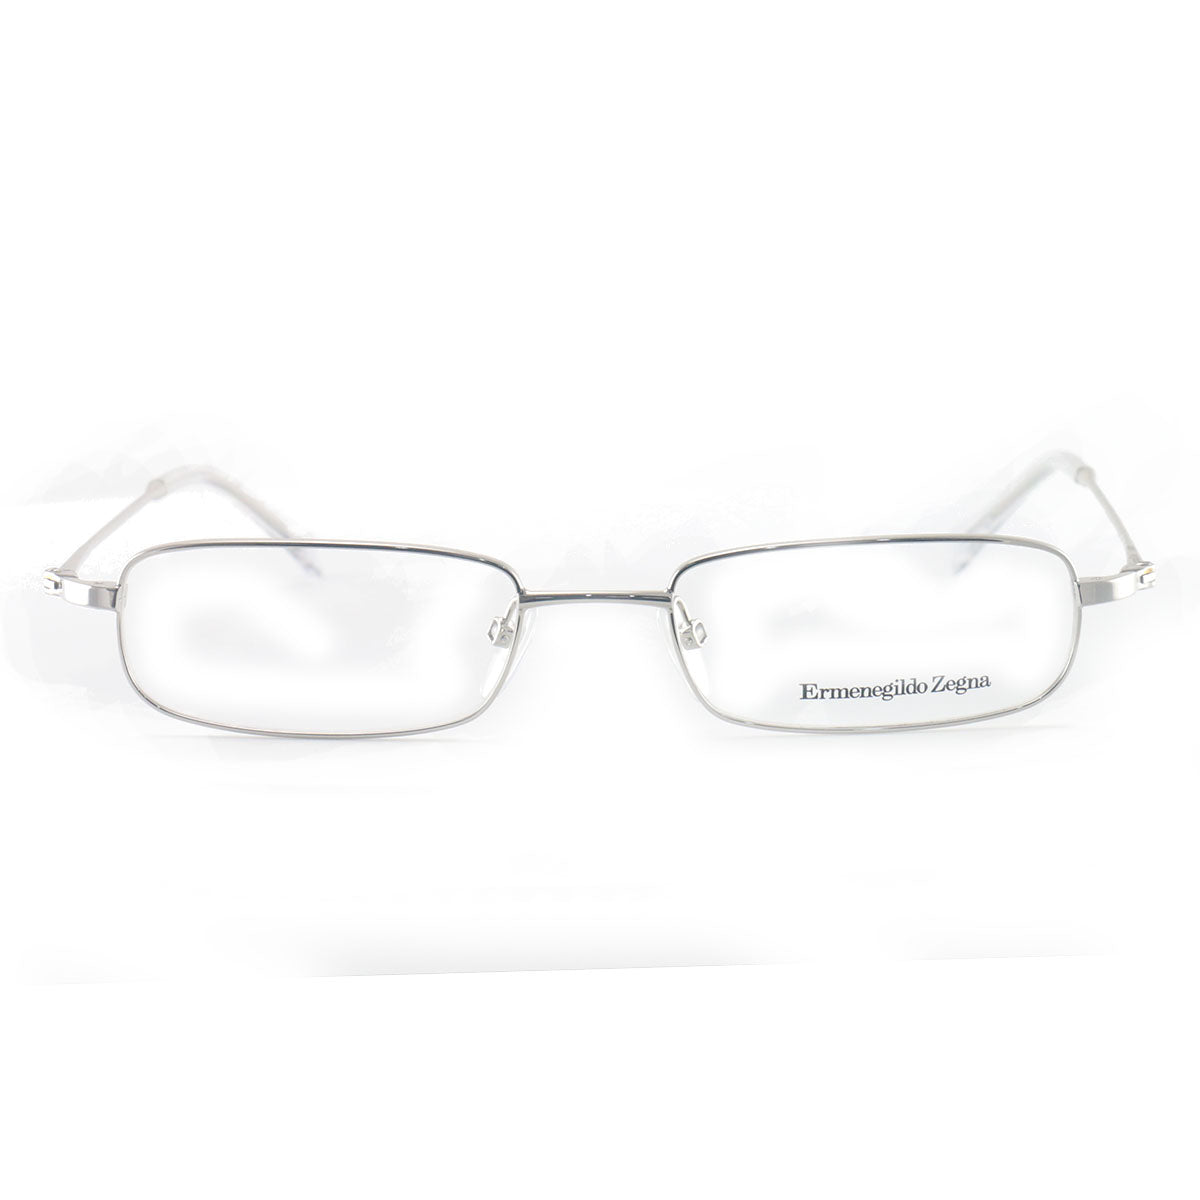 Ermenegildo Eyeglasses Unisex